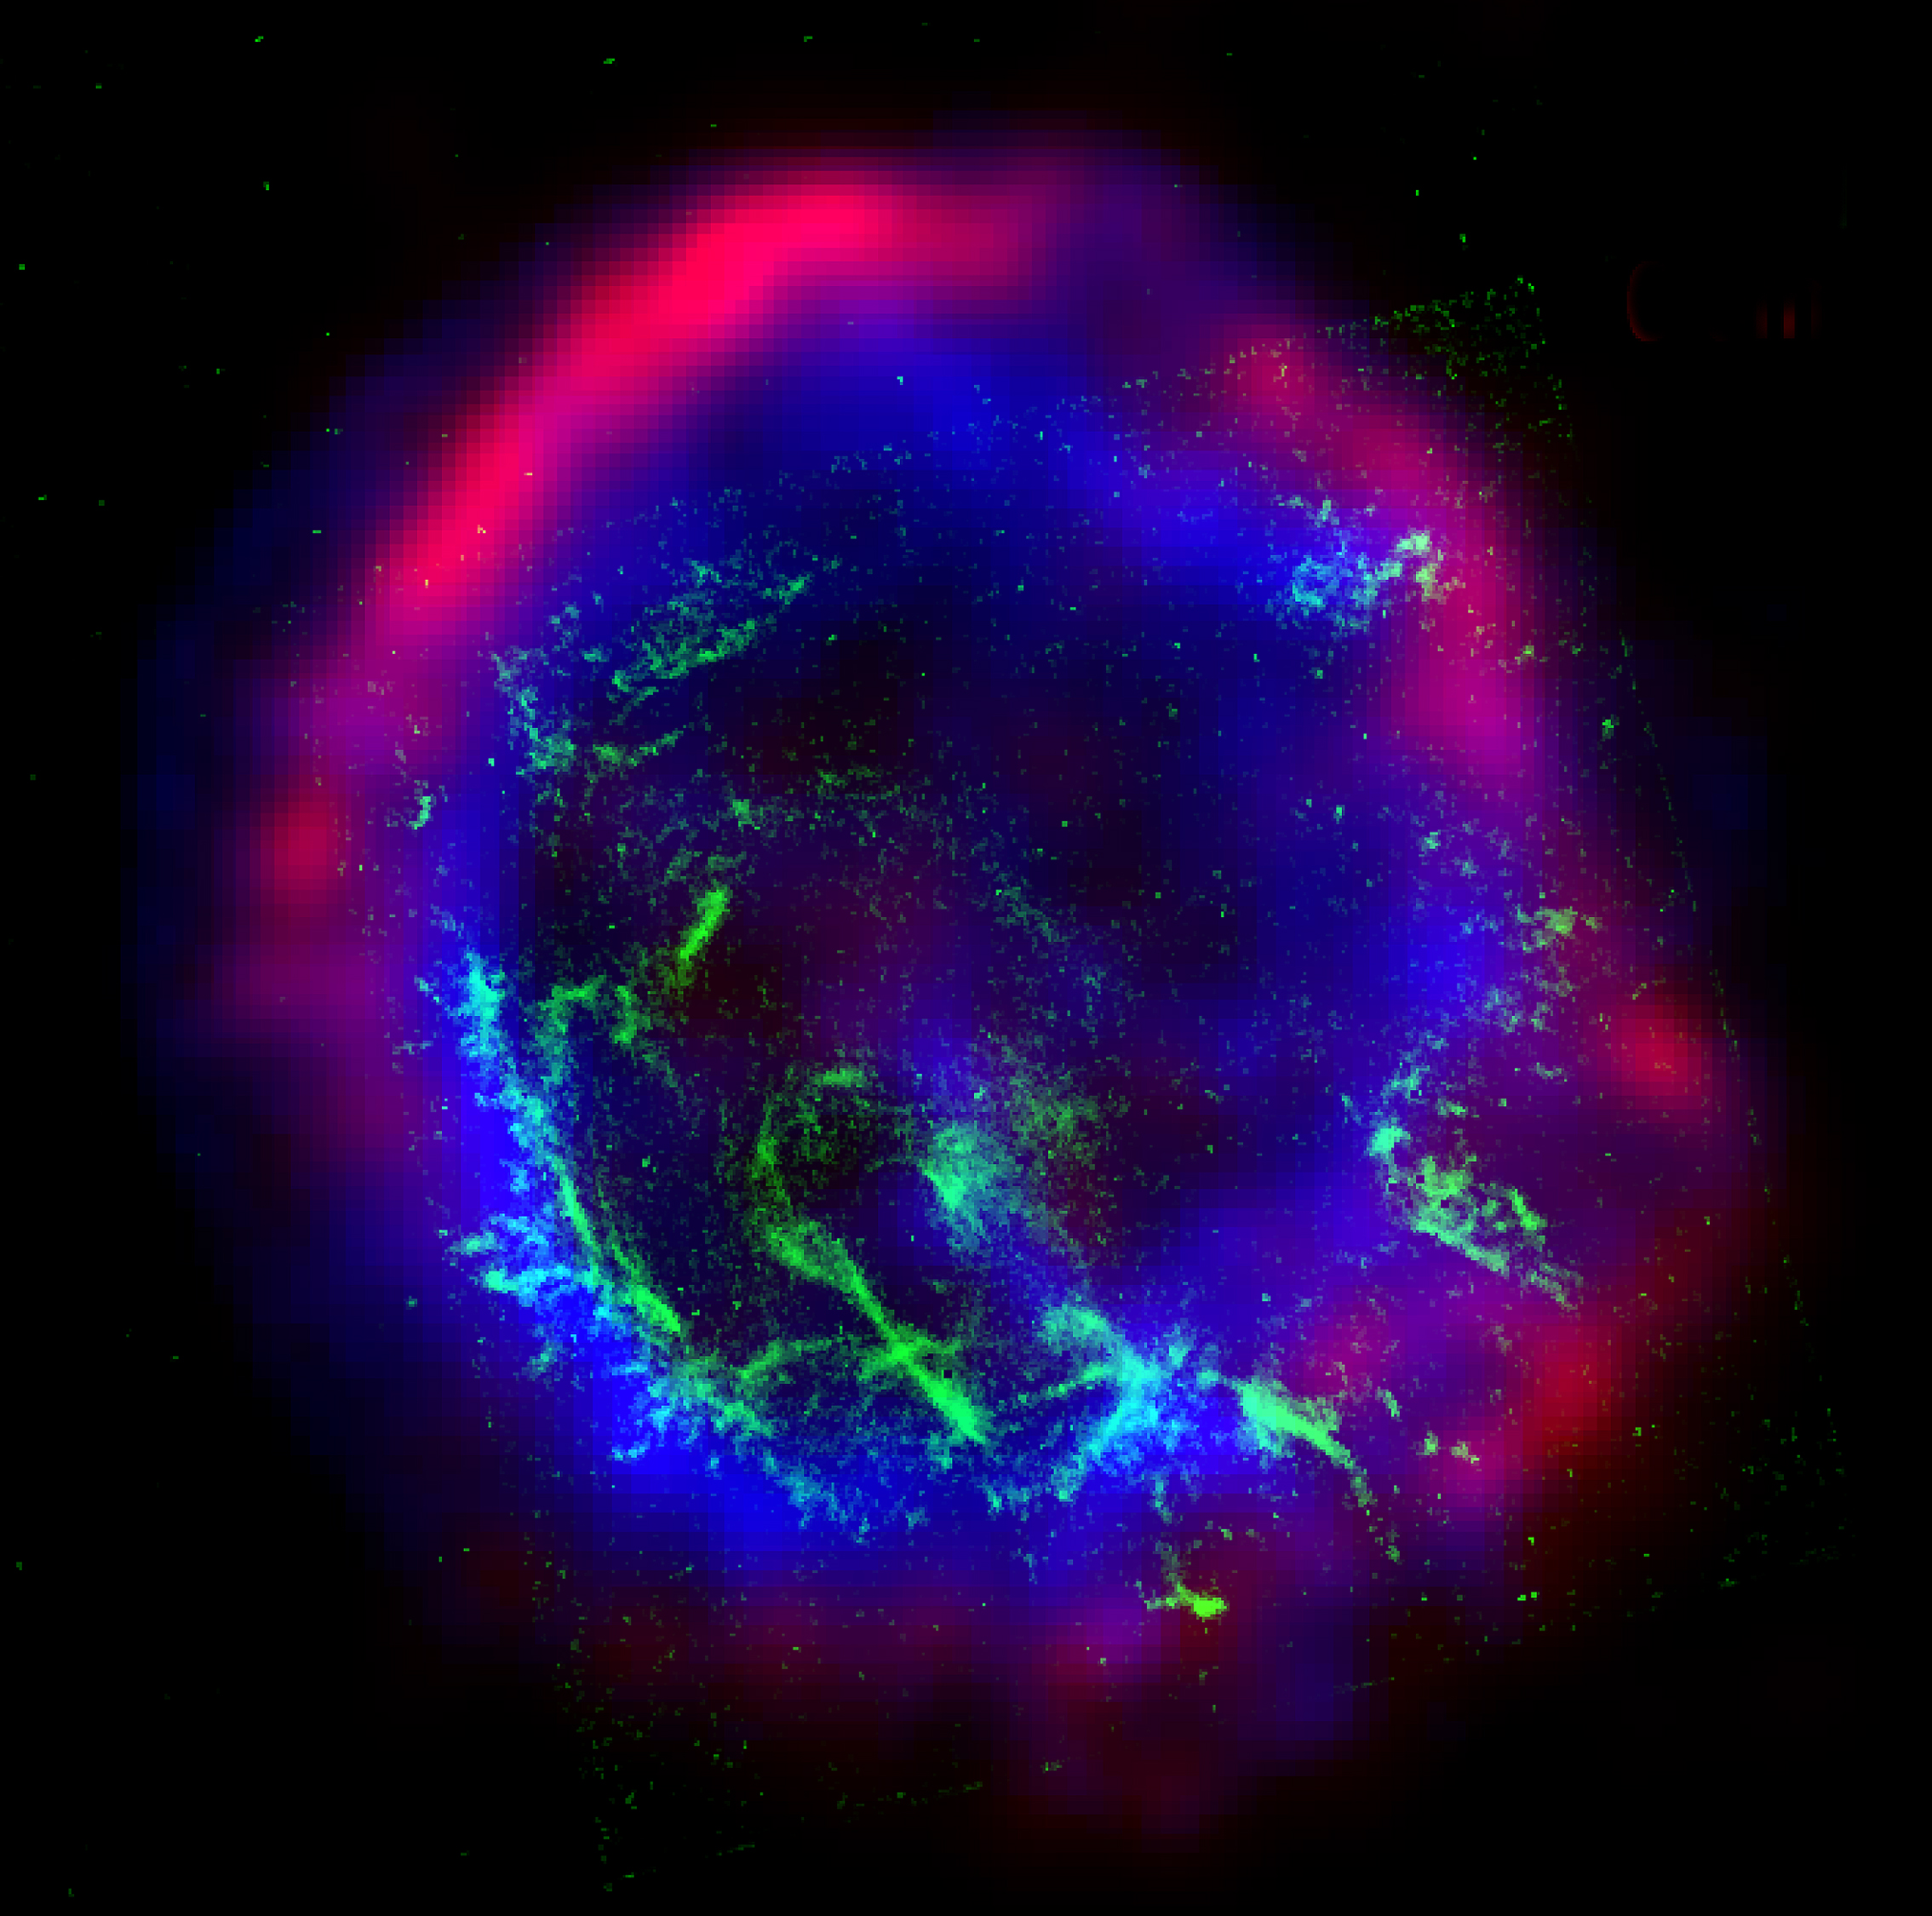 Supernova remnant E0102-72